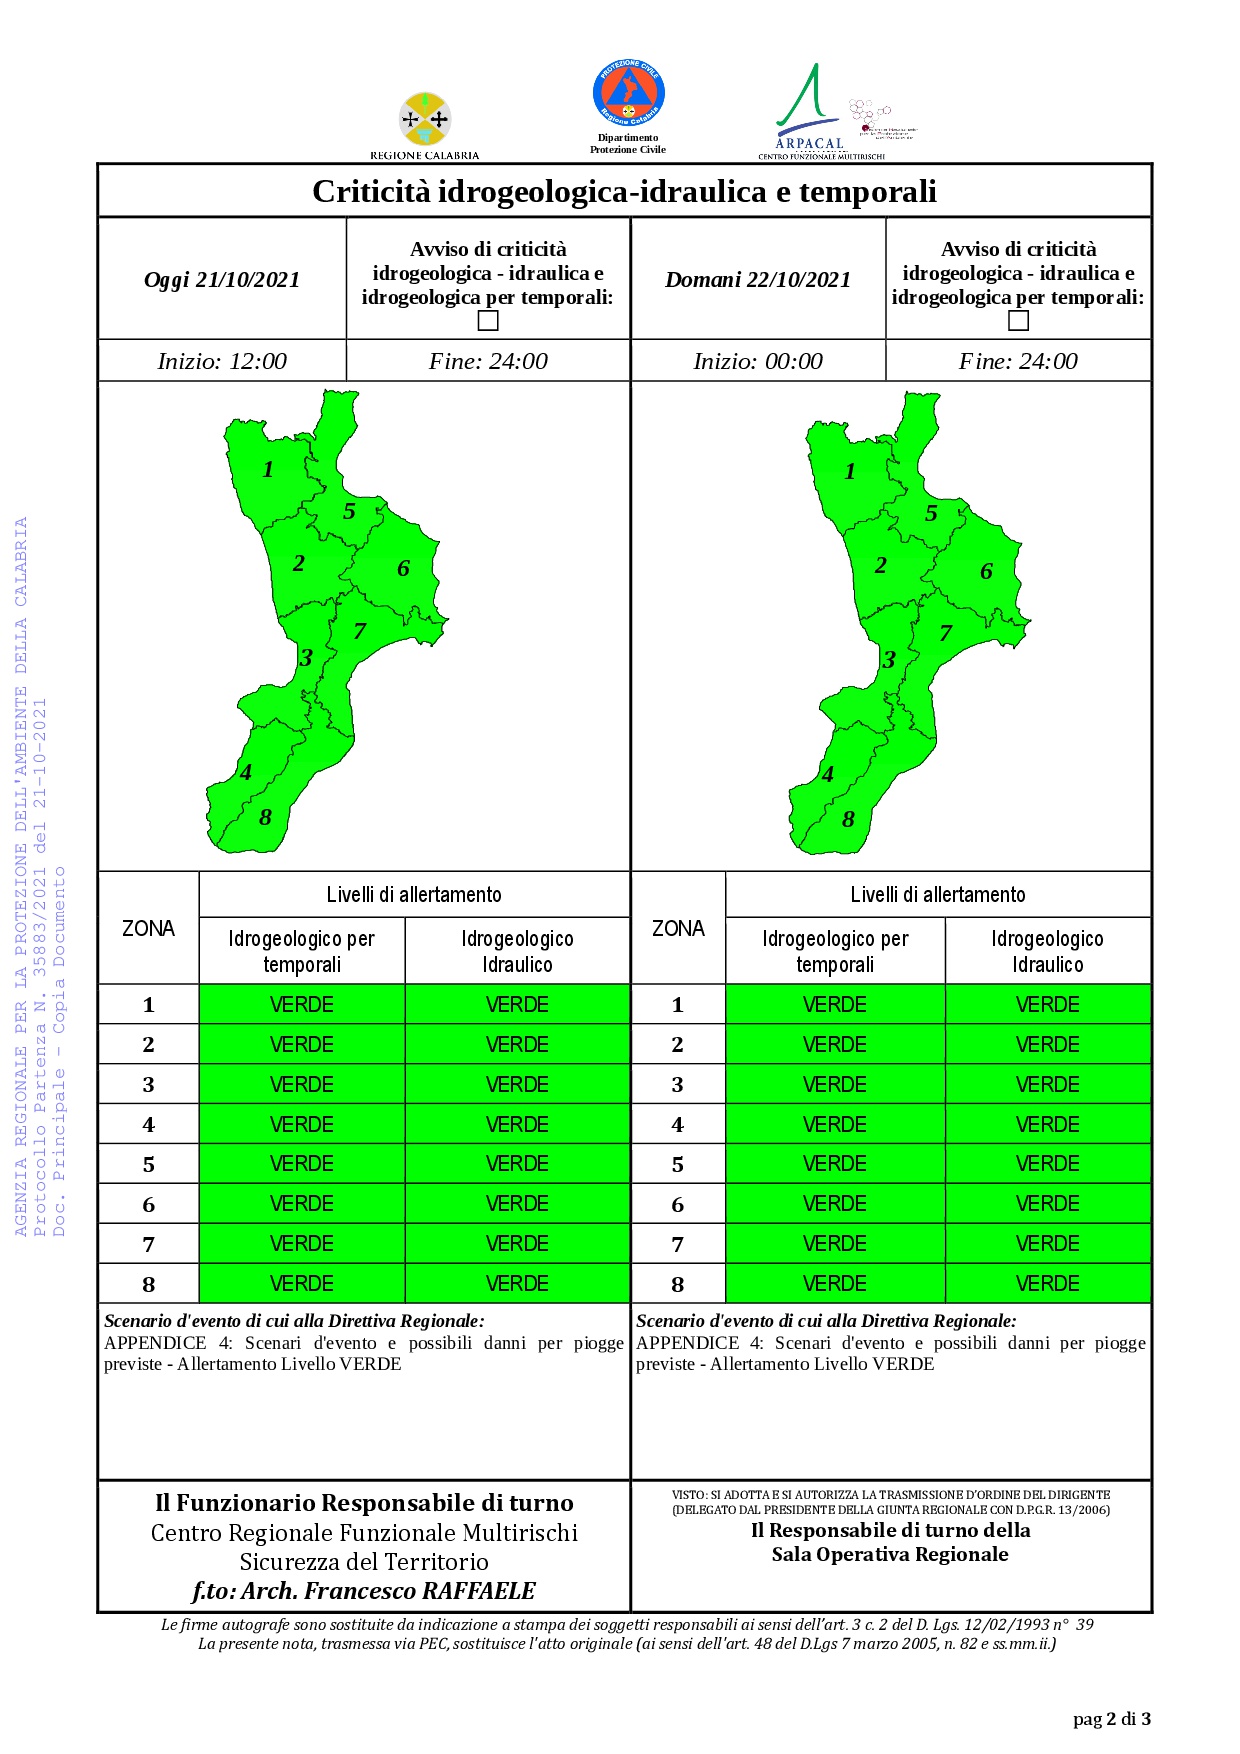 Criticità idrogeologica-idraulica e temporali in Calabria 21-10-2021